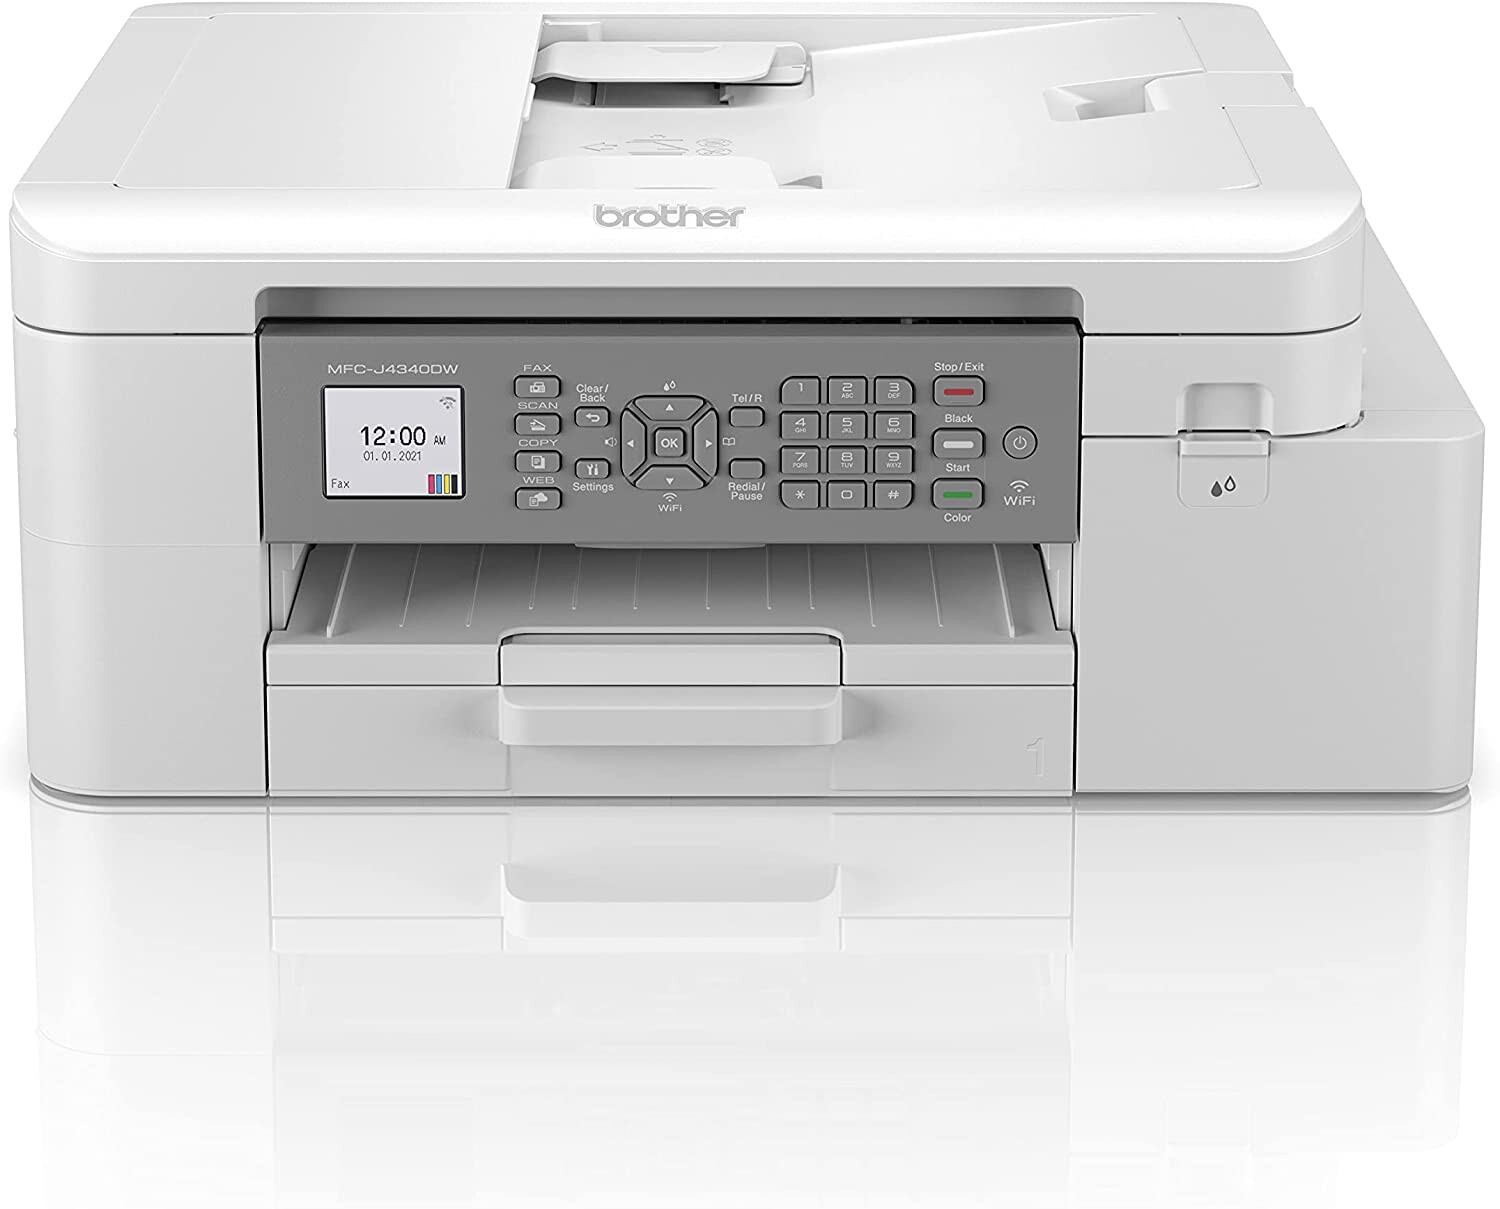 Brother MFC-J4340DW Inkjet Printer – White (No Ink) #363784